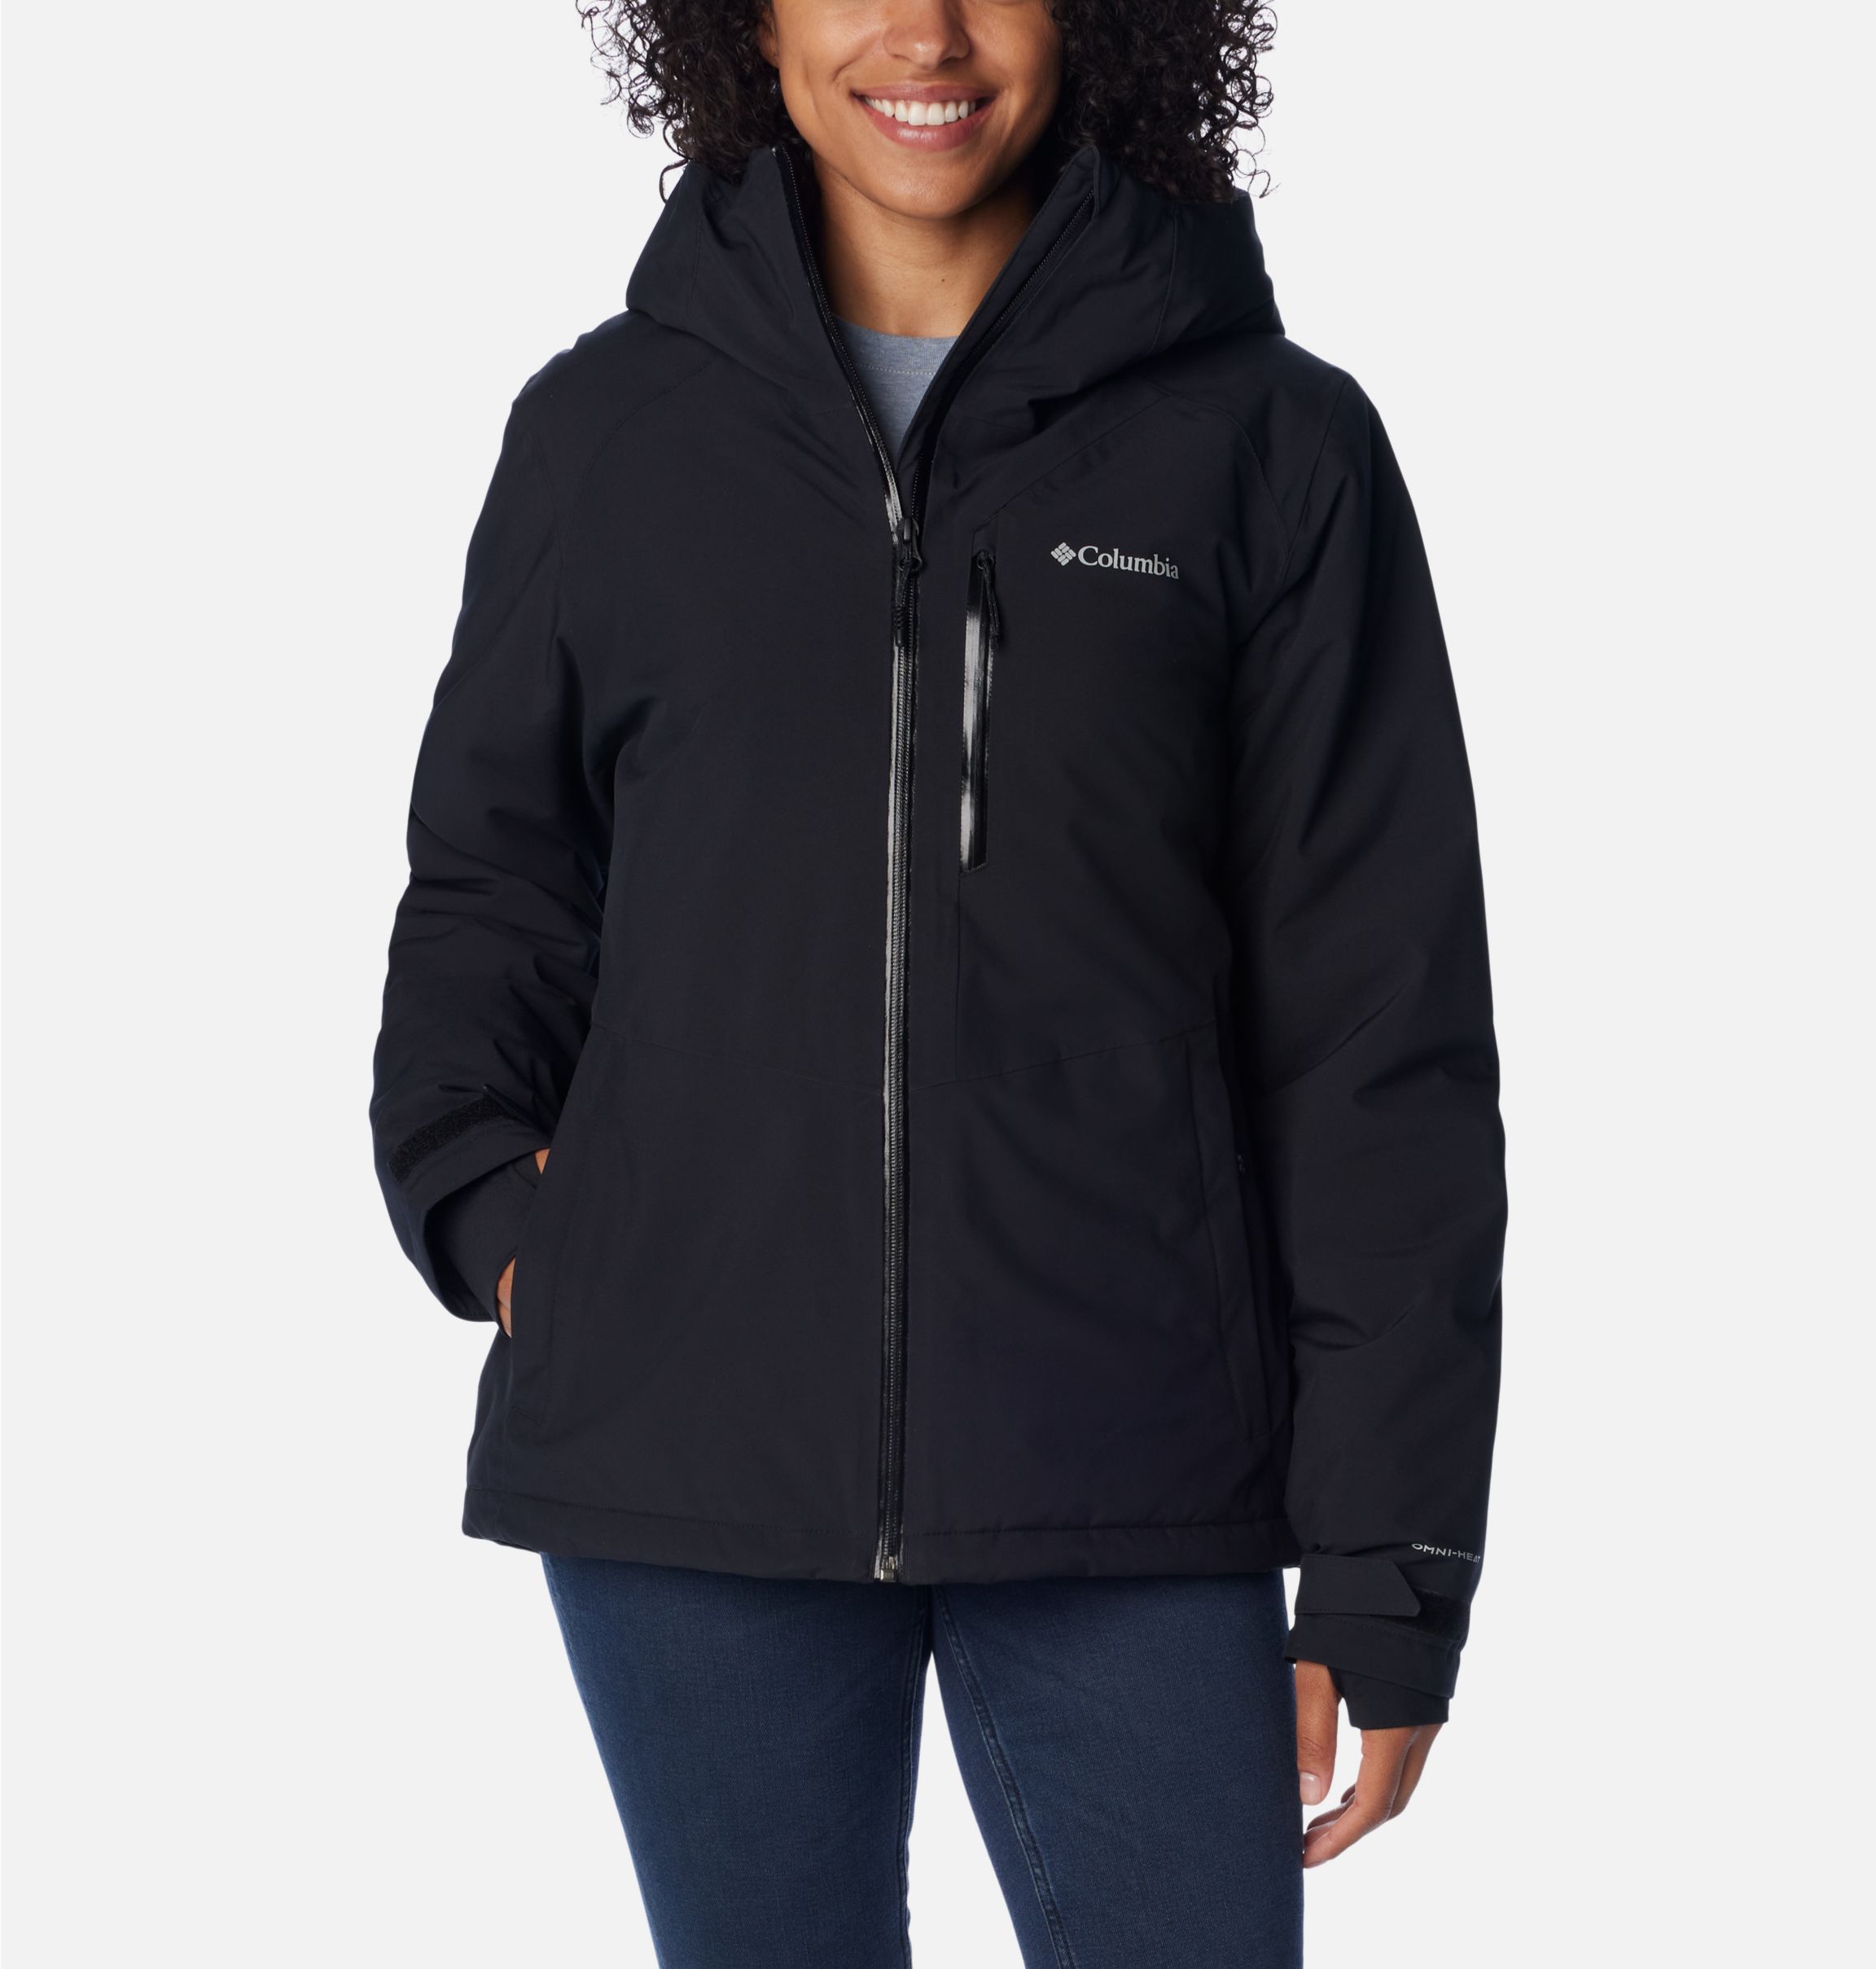 Women's Explorer's Edge™ Insulated Jacket | Columbia Sportswear